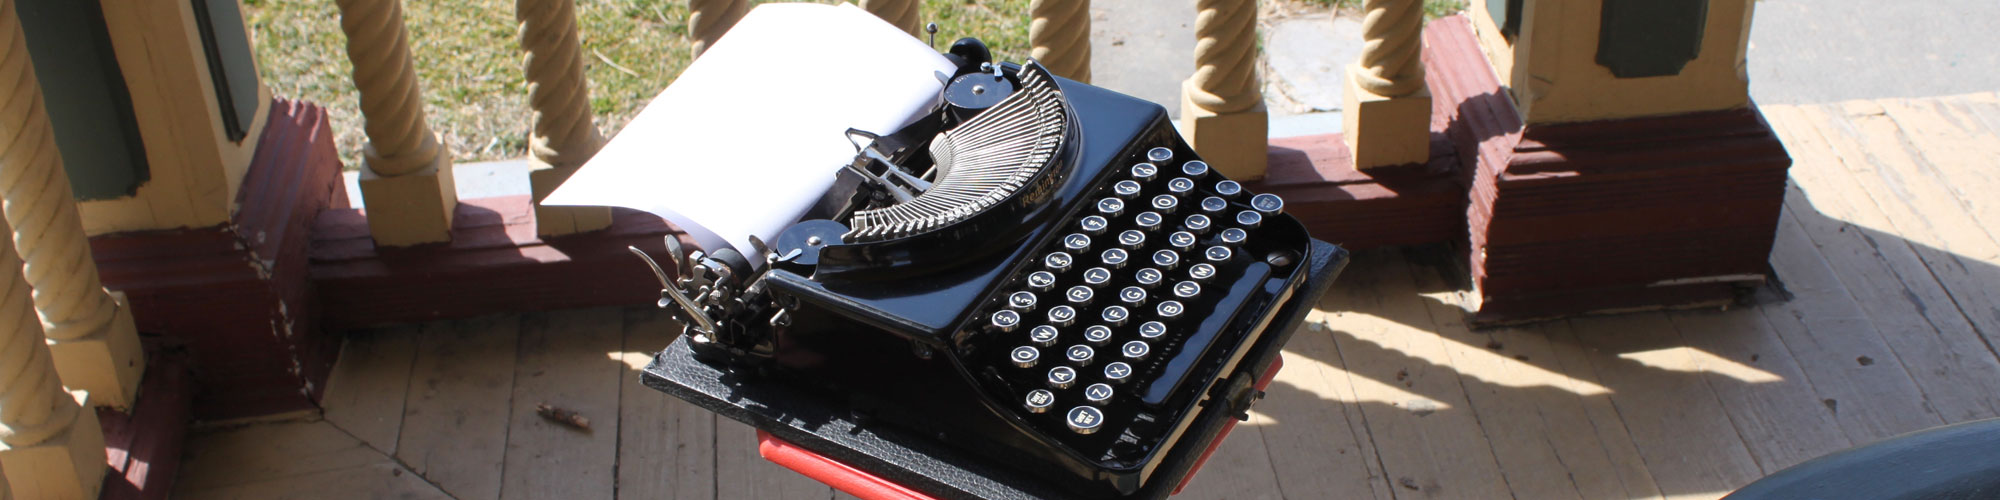 Outdoor Vintage Typewriter - Staten Island, NY